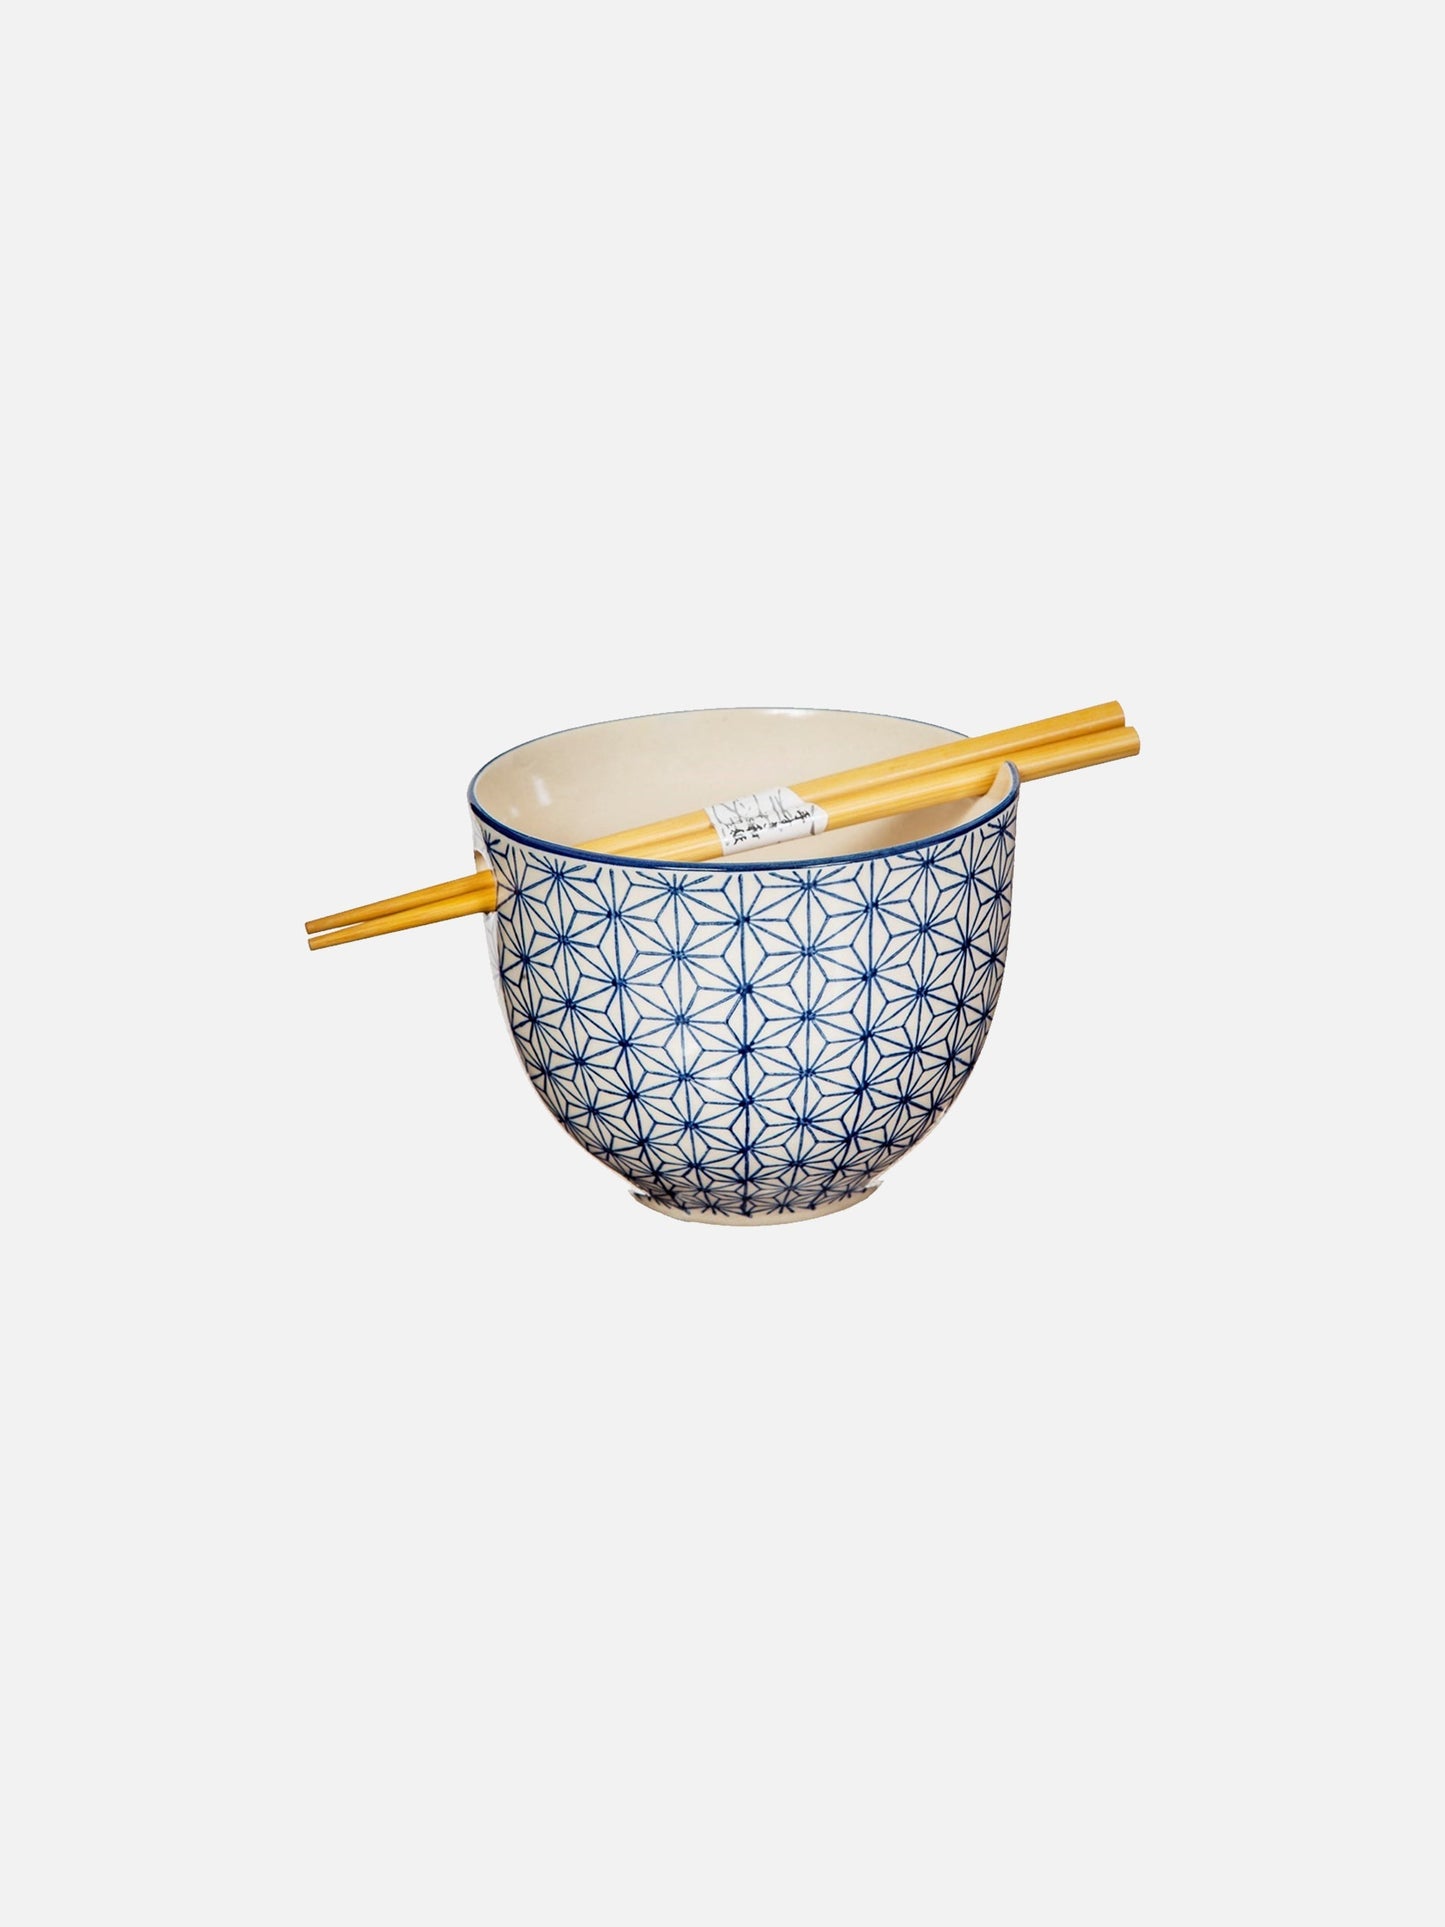 Sashiko Pattern Noodle Bowl With Chopsticks